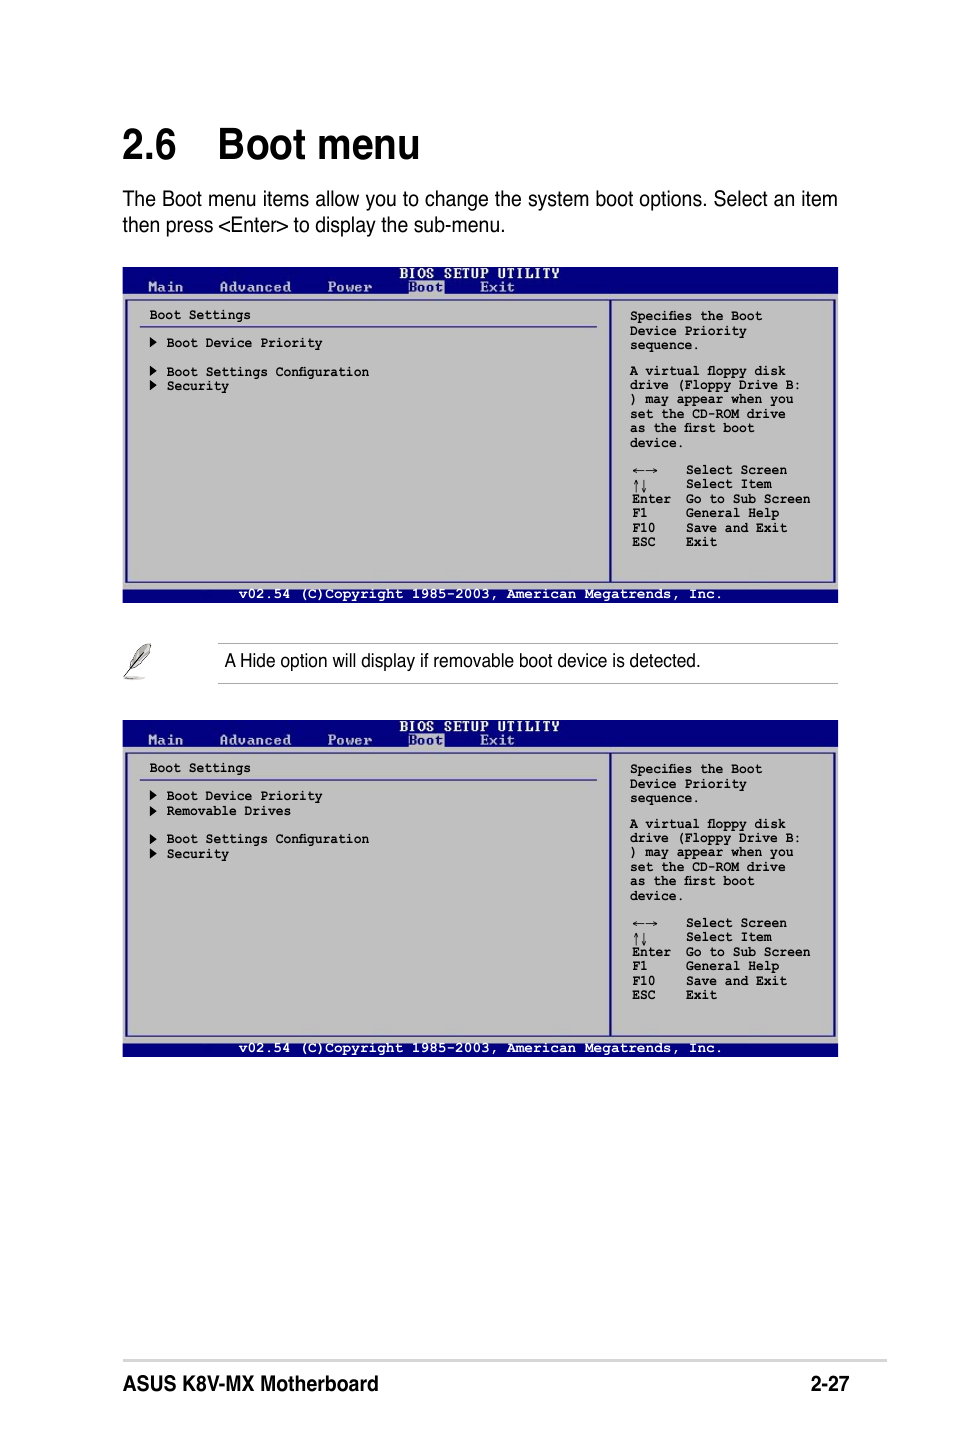 6 boot menu, Asus k8v-mx motherboard 2-27 | Asus K8V-MX User Manual | Page  63 / 72